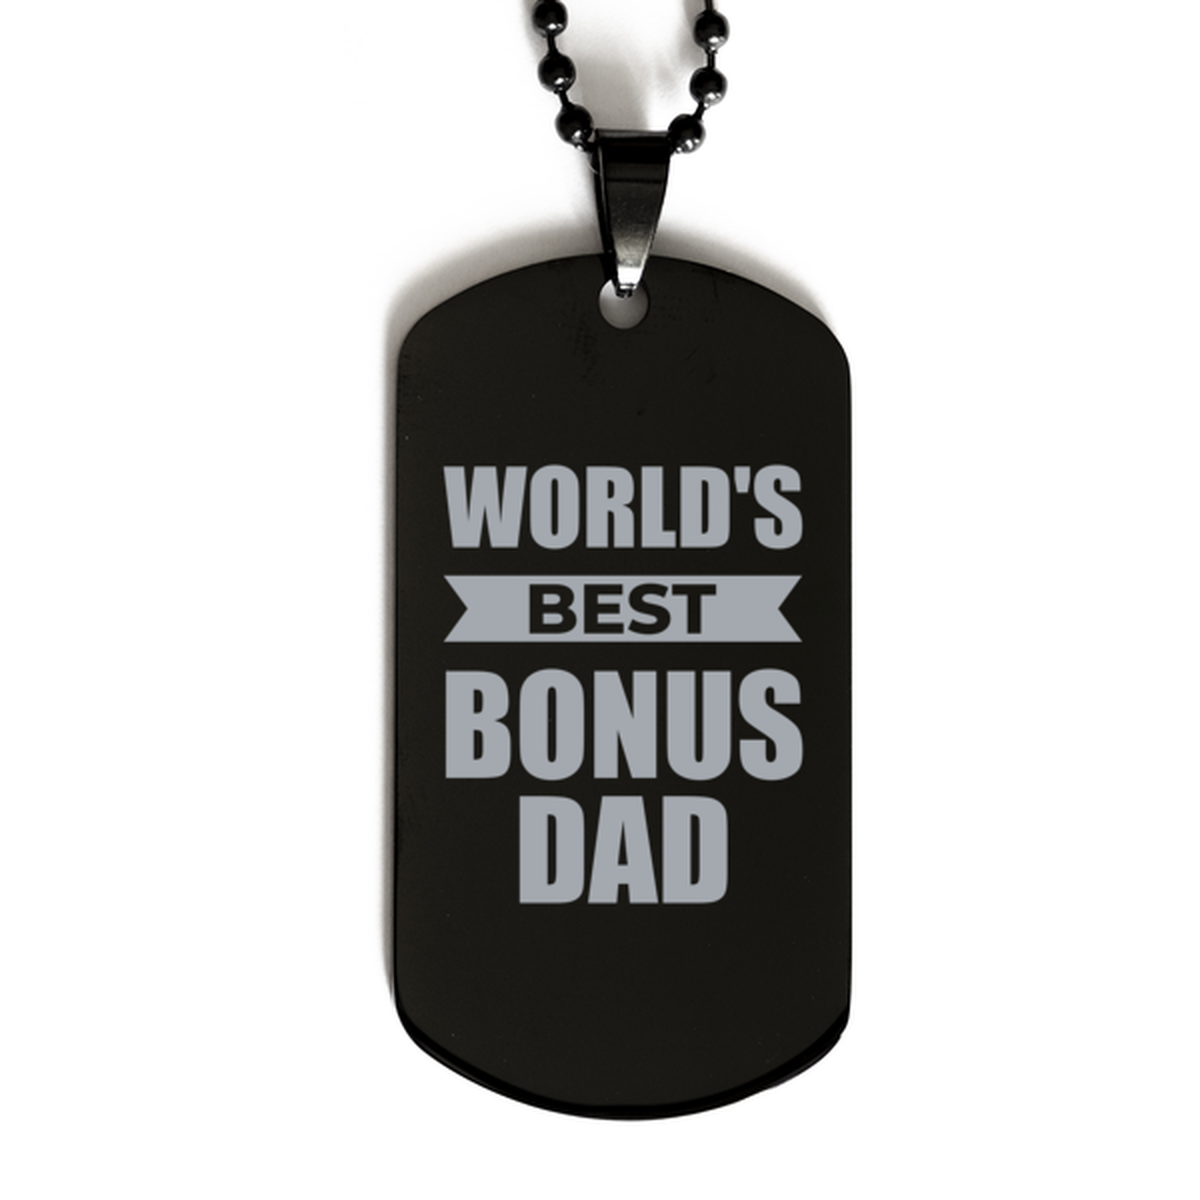 Worlds Best Bonus Dad Gifts, Funny Black Engraved Dog Tag For Bonus Dad, Birthday Presents For Men